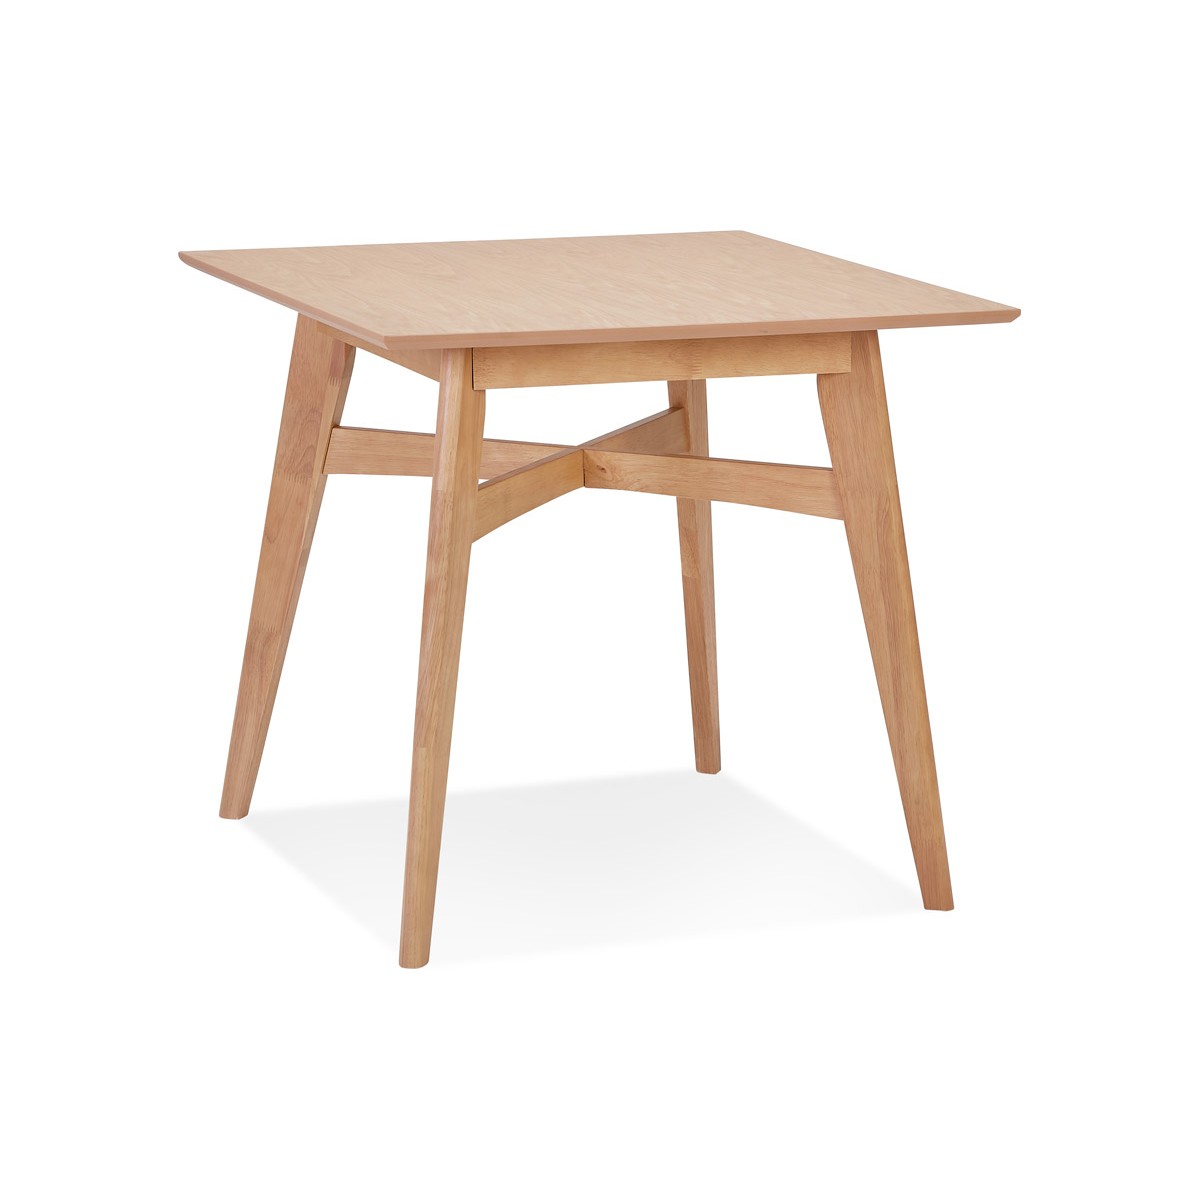 Tavolino quadrato da pranzo in legno in stile scandinavo